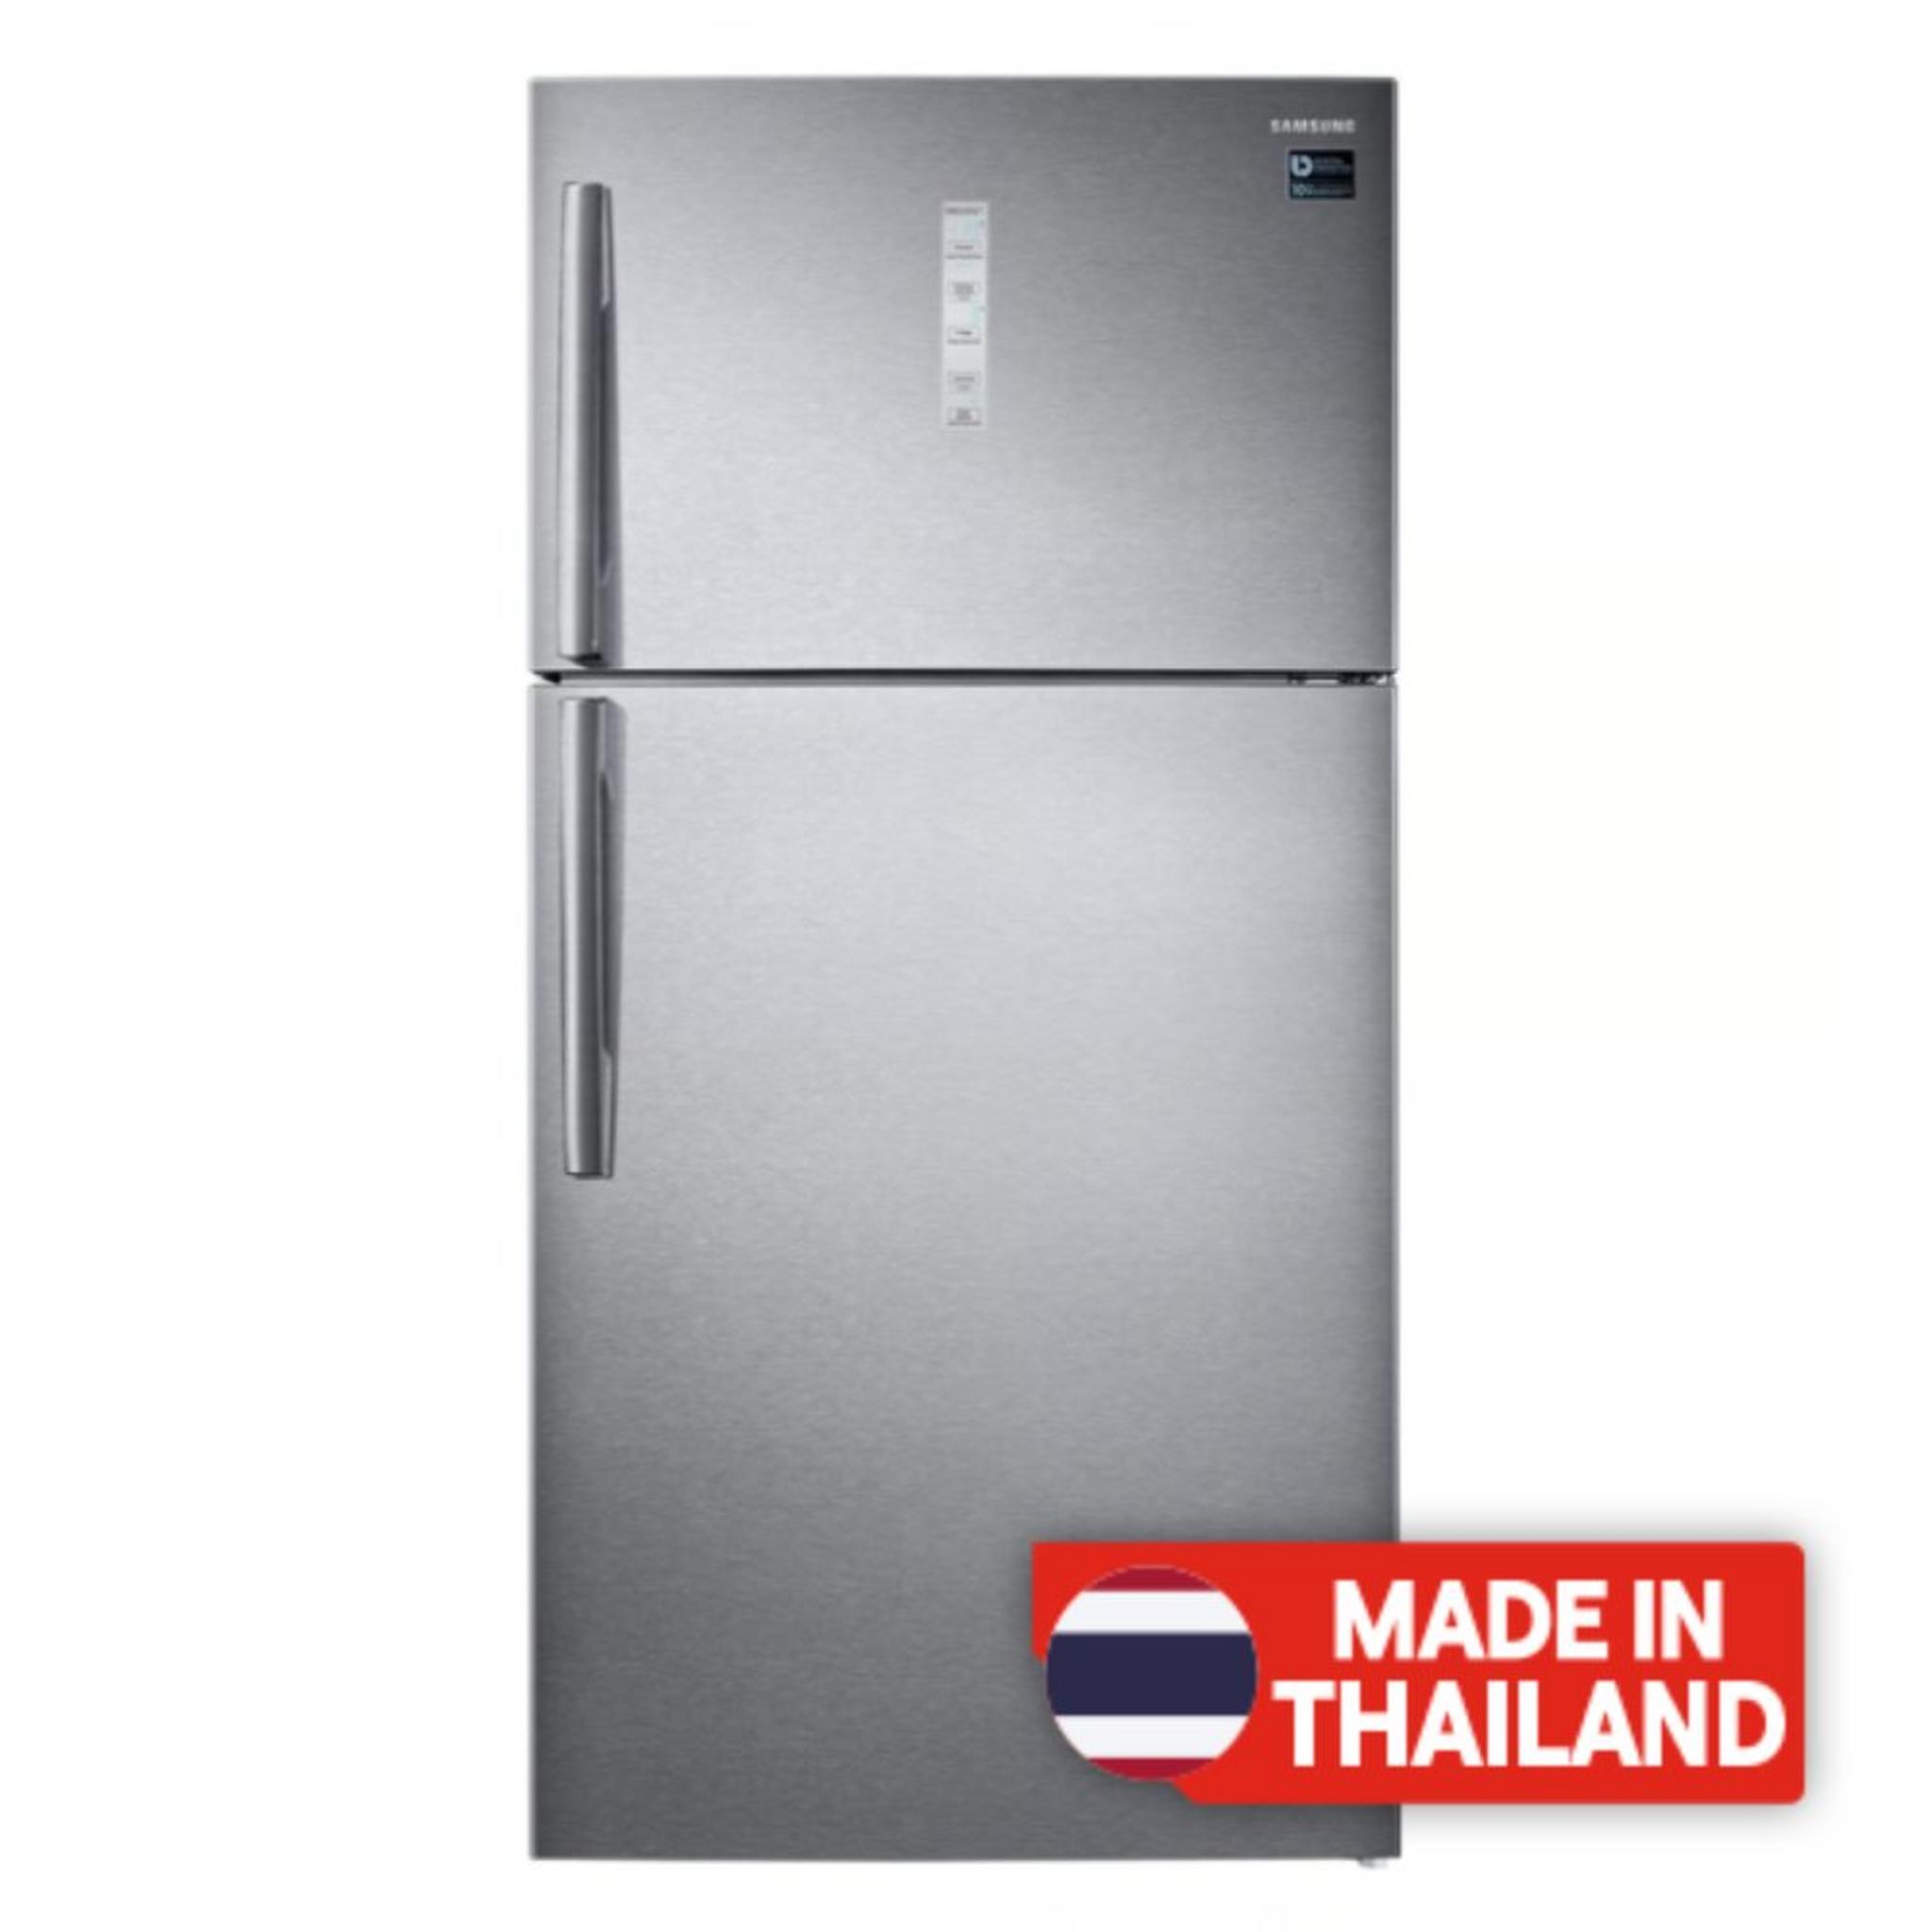 Samsung Top Mount Refrigerator, 29CFT, 810-Liters, RT81K7050SL - Silver